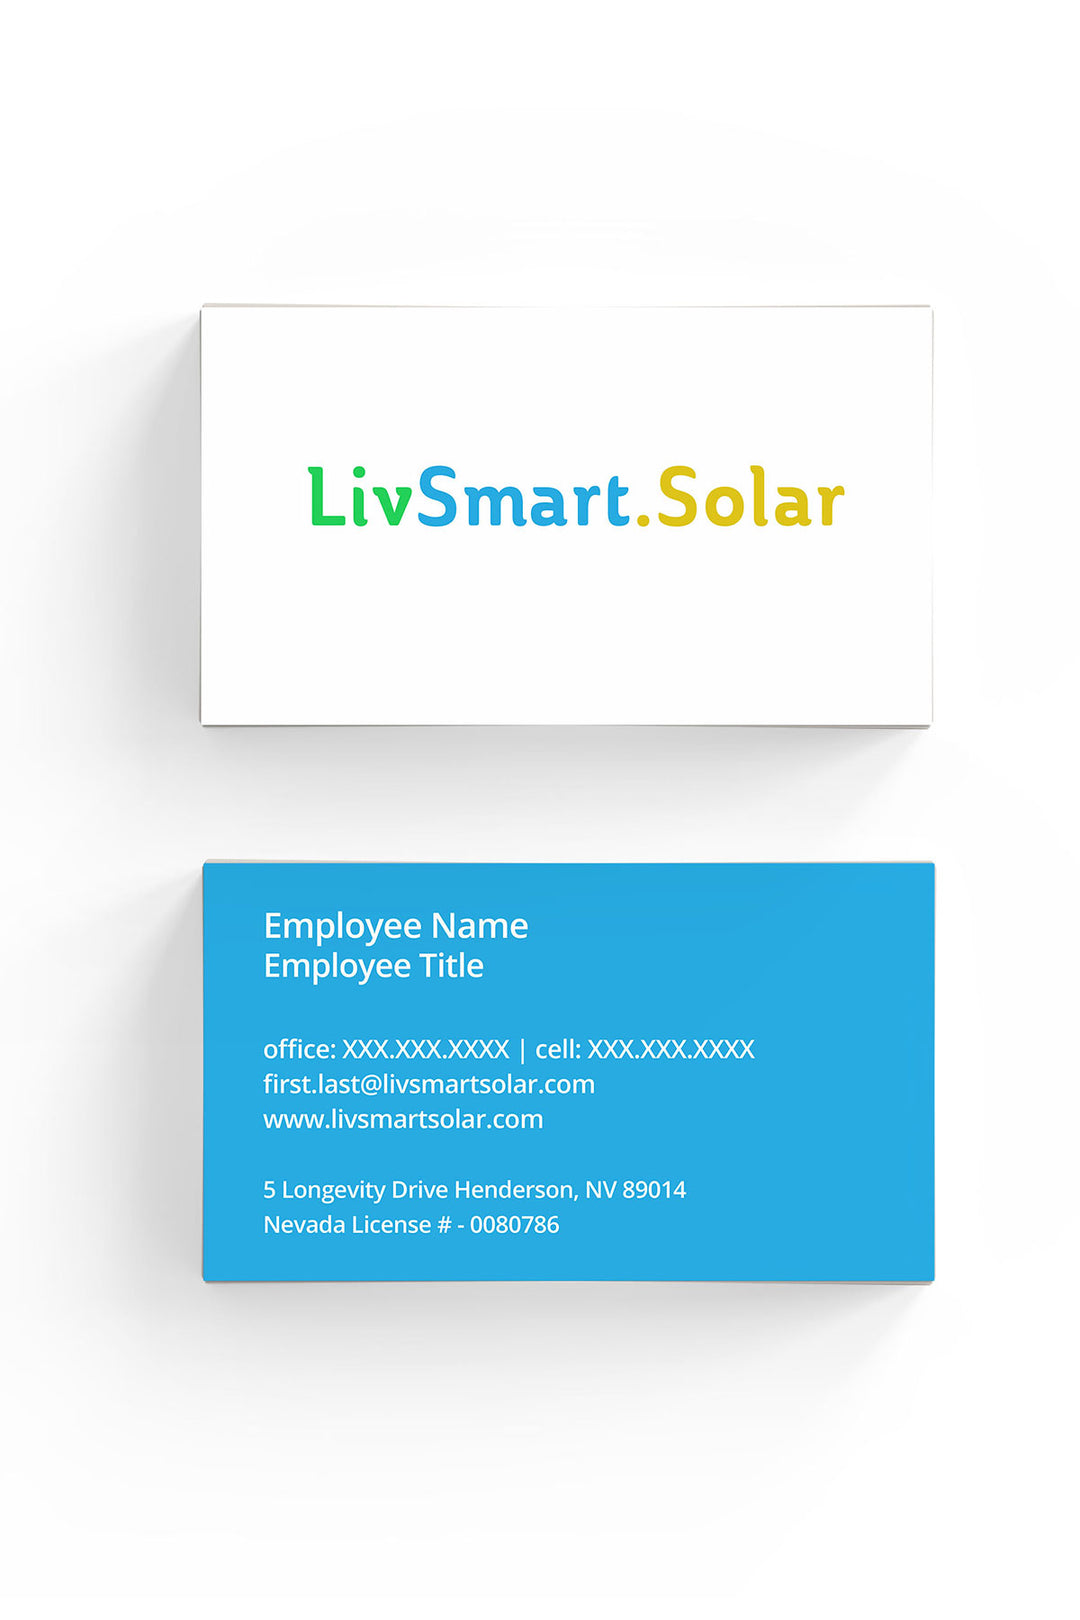 LivSmart.Solar Business Cards